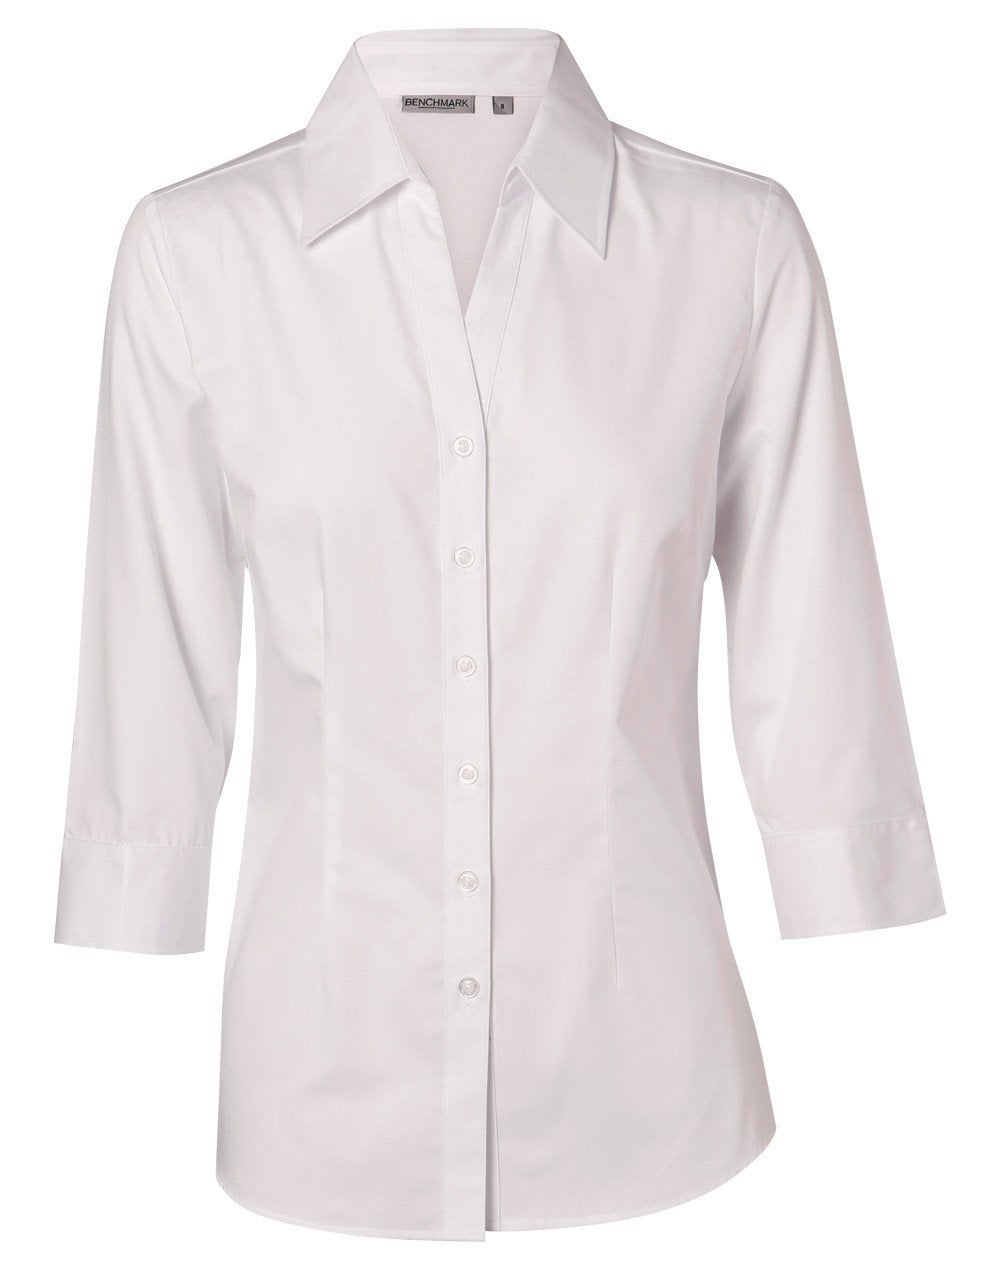 Women's Cotton/Poly Stretch 3/4 Sleeve Shirt